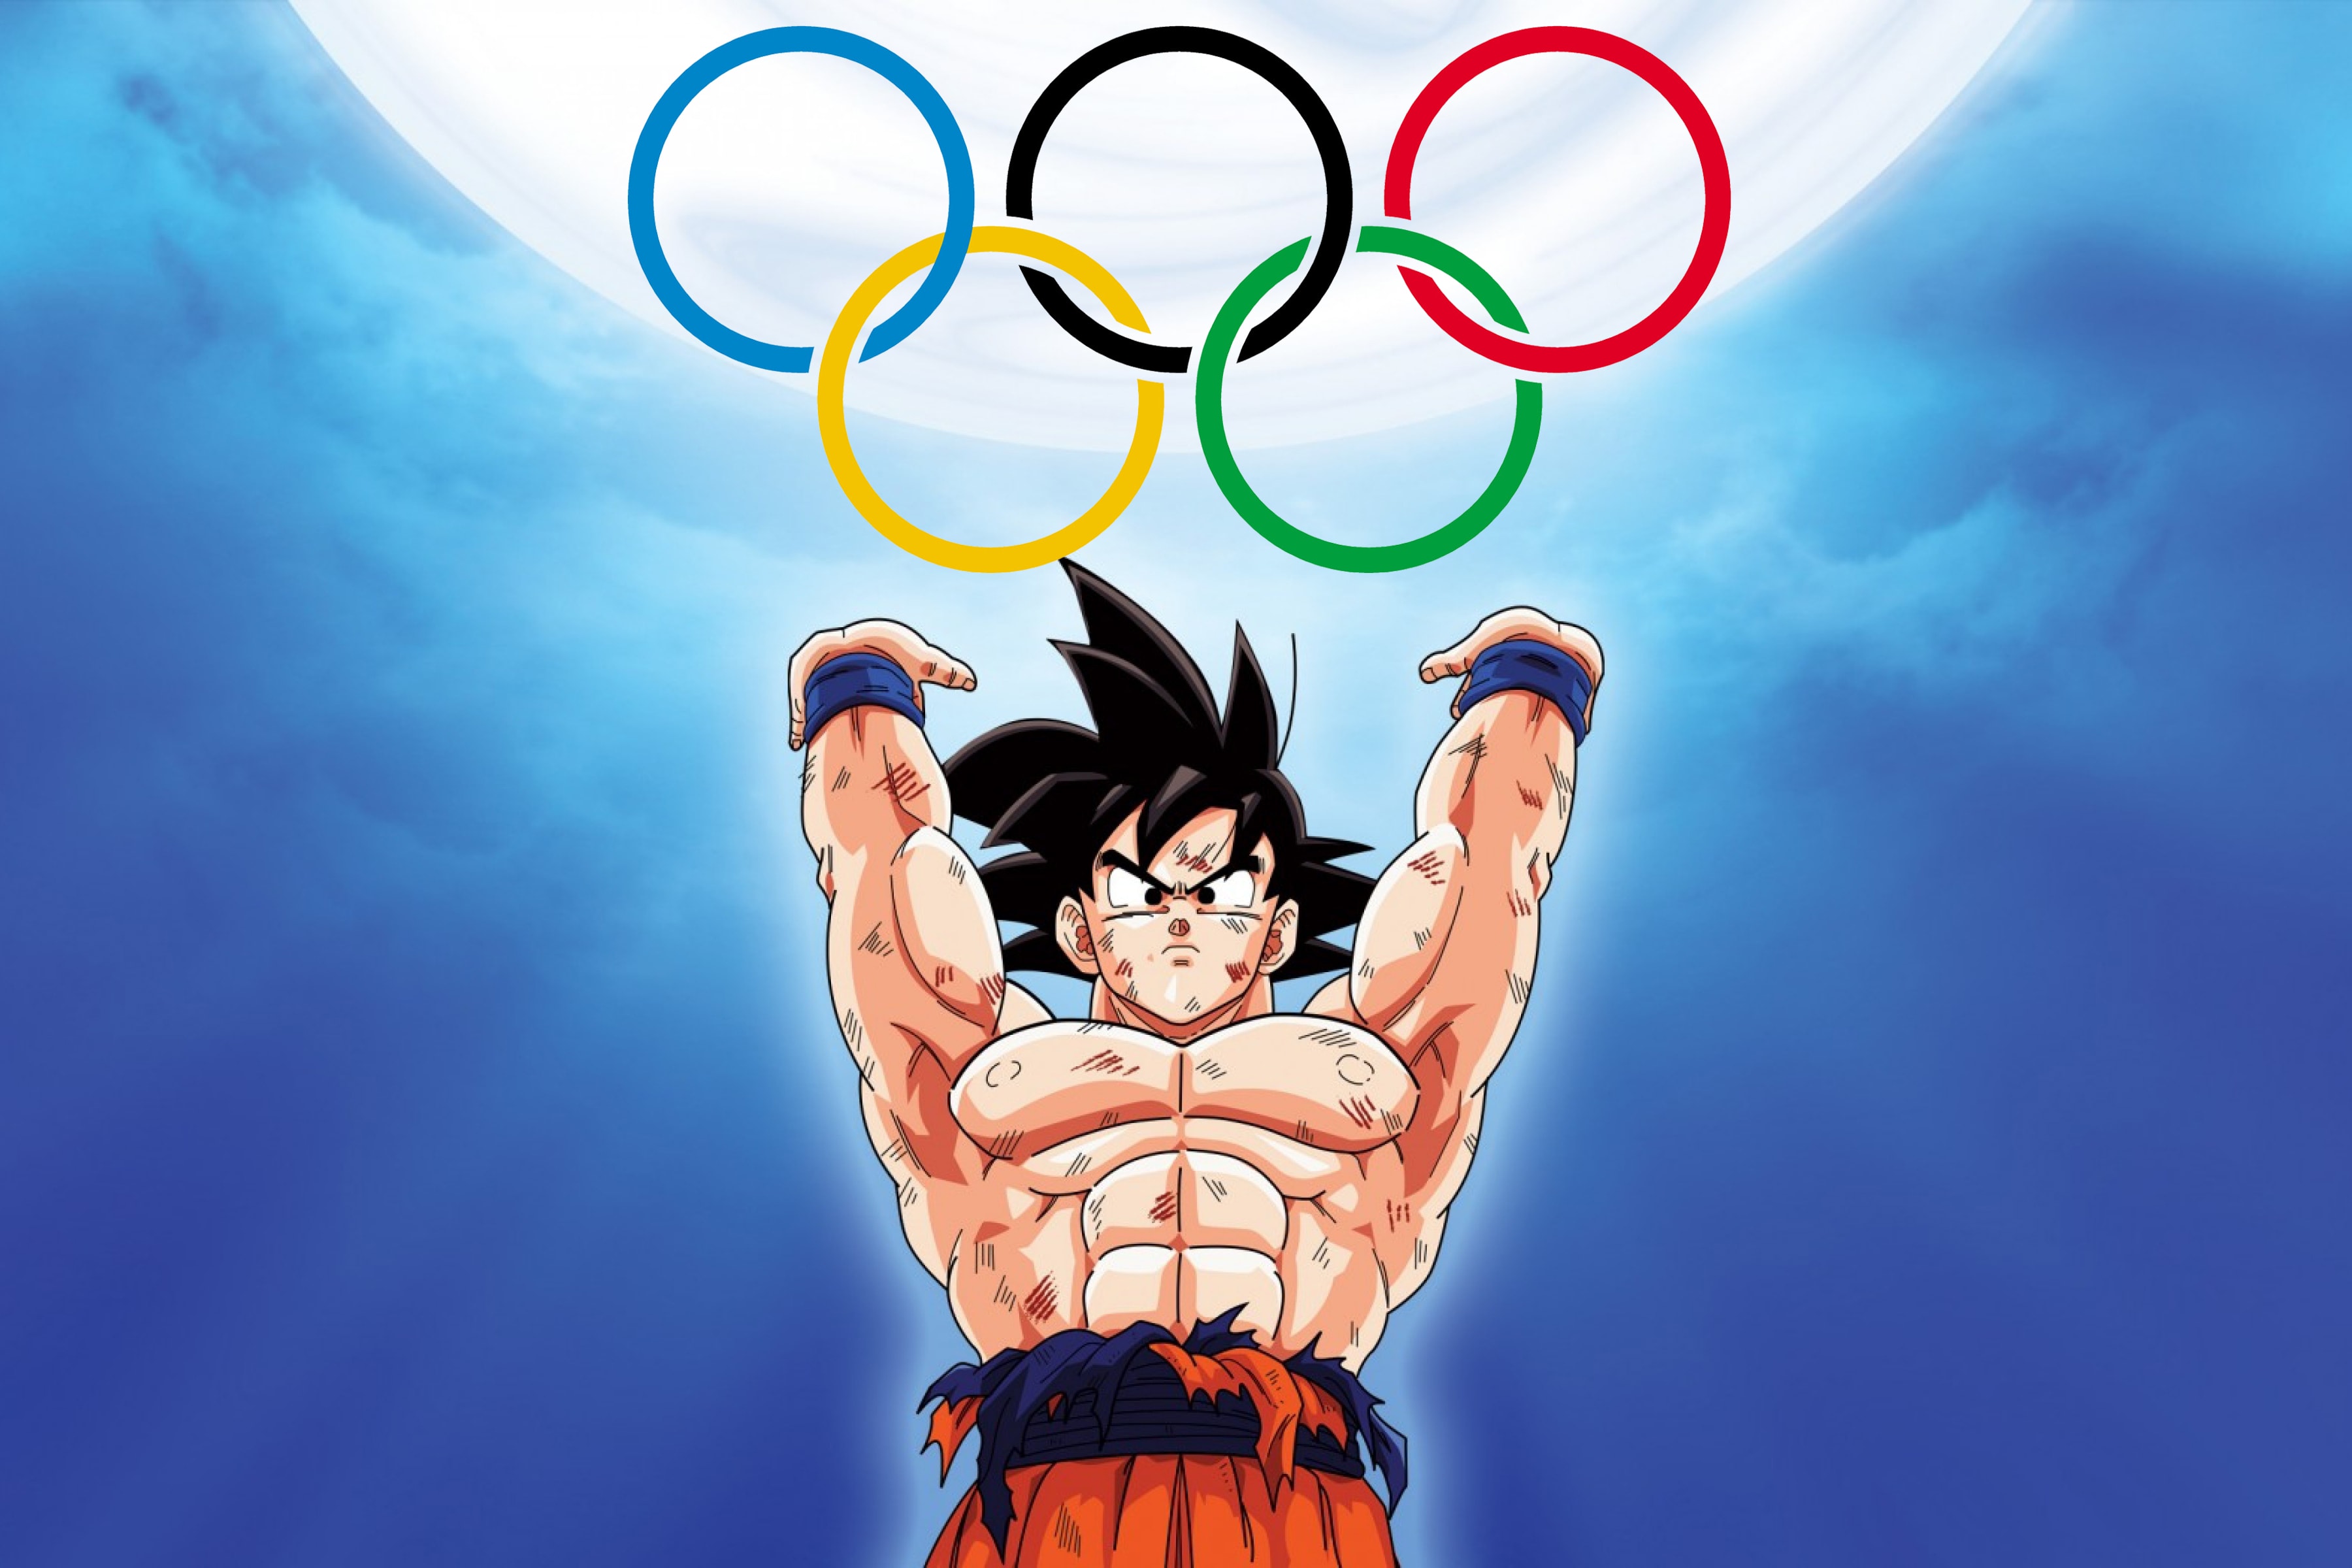 Son Goku 2020 Tokyo Olympics Ambassador Rumors